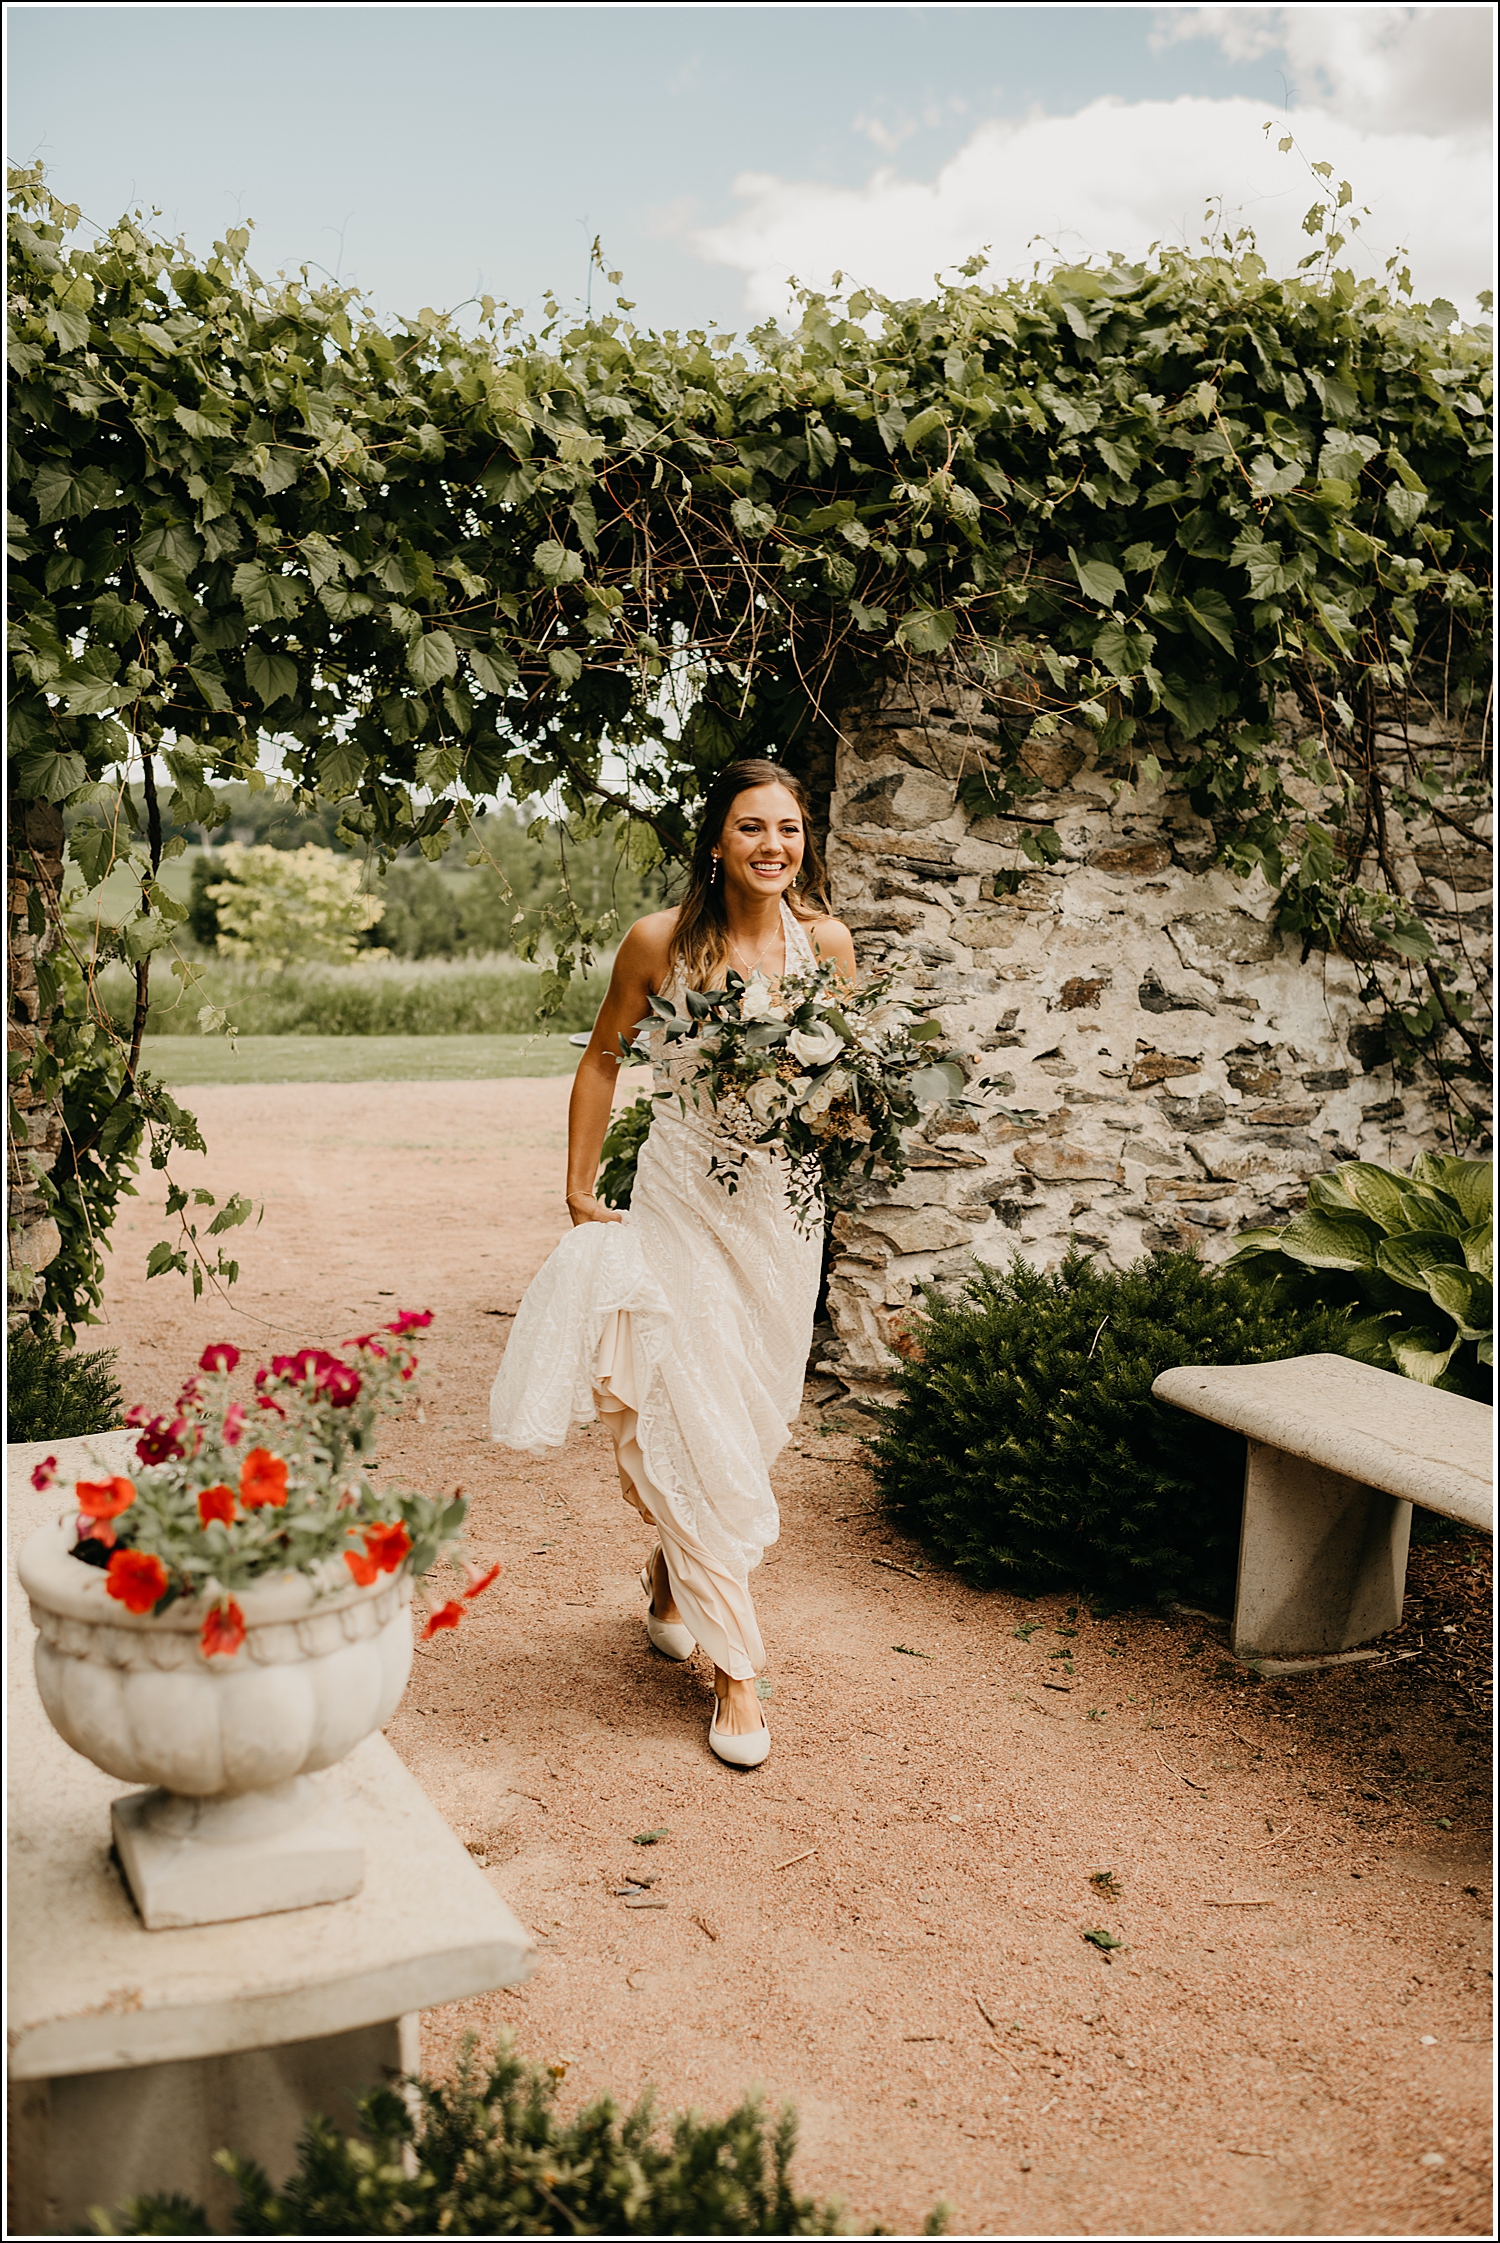 Tansy hill farm wisconsin wedding photographer bride smiling walking in garden vines rock wall